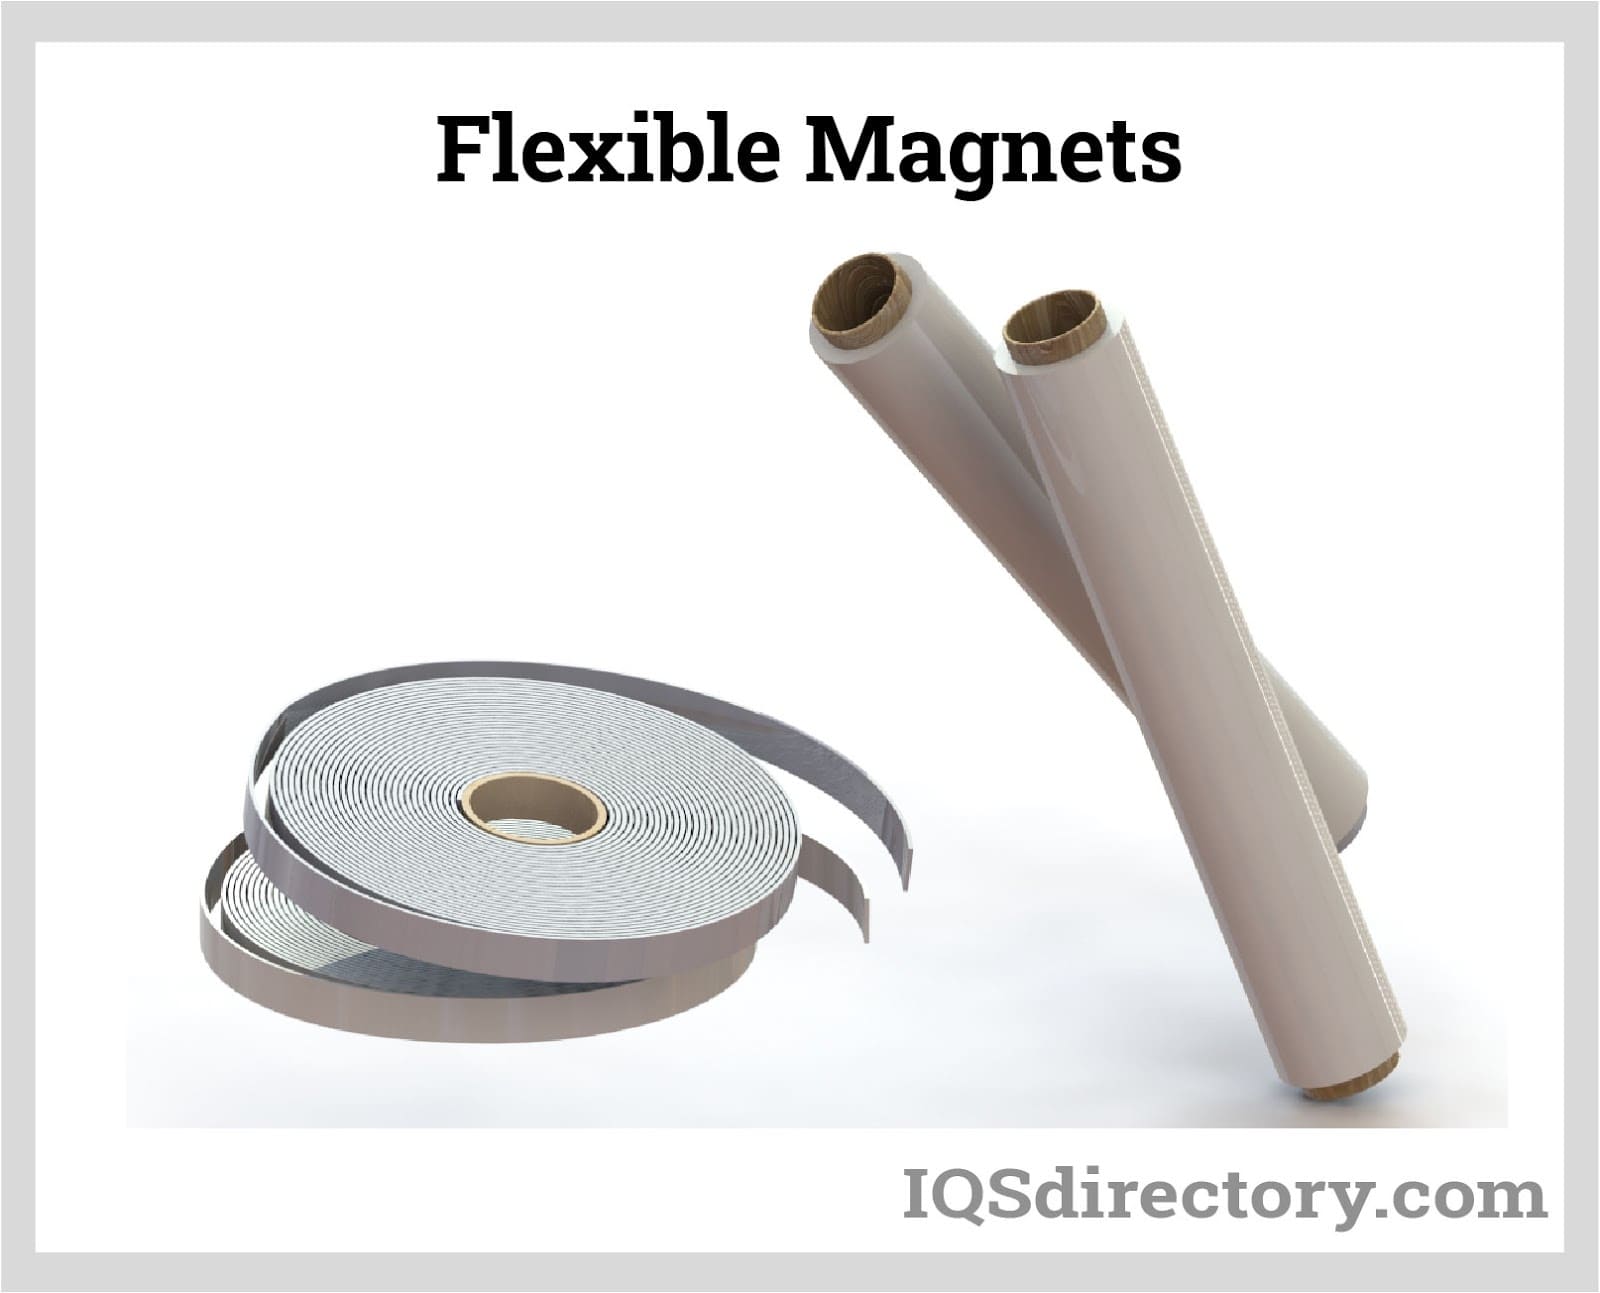 Flexible Magnets